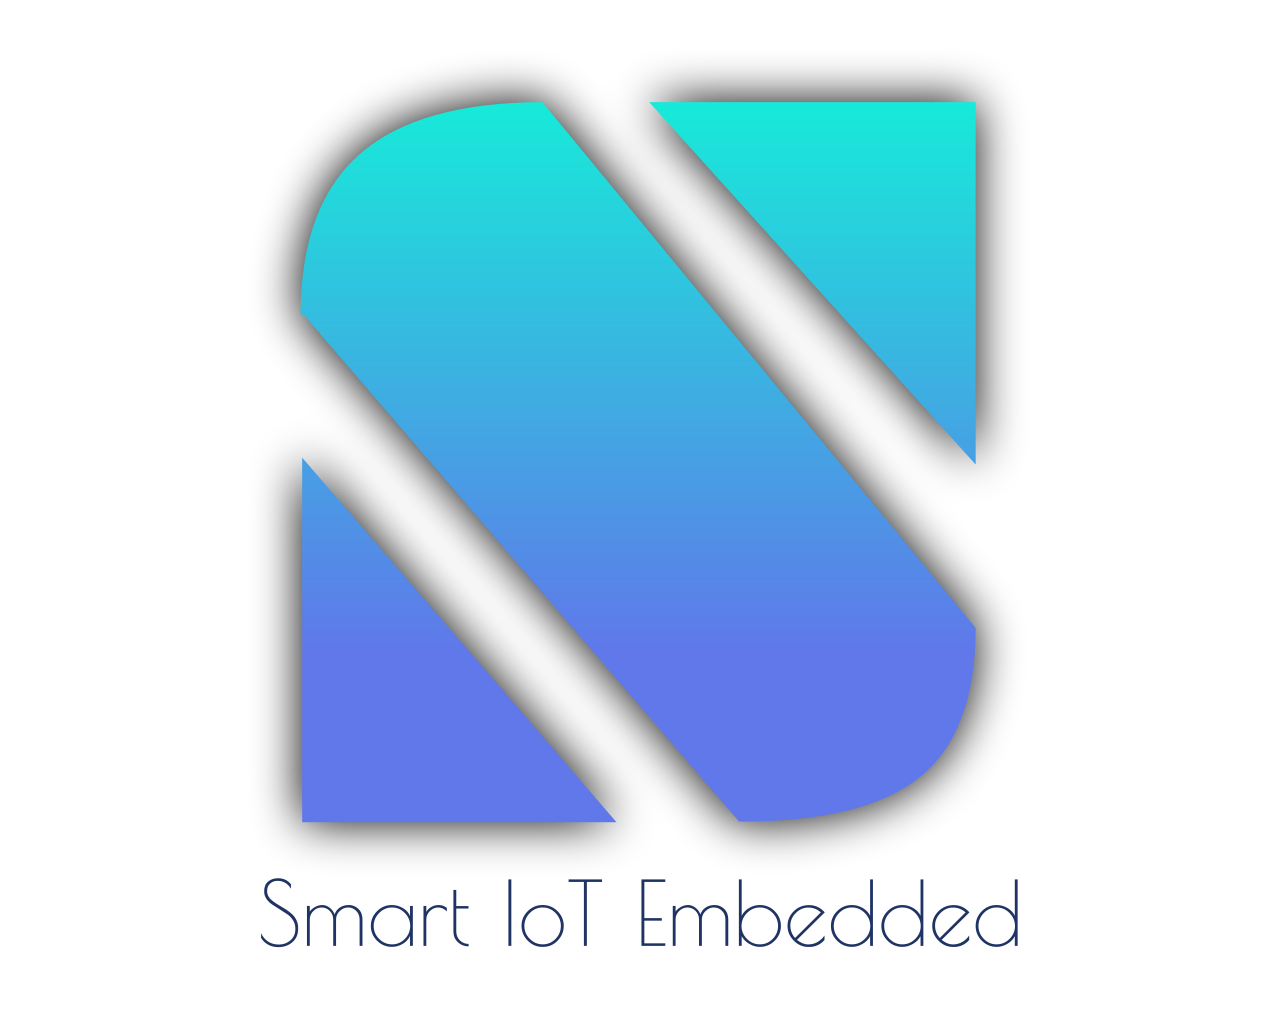 Smart IoT Embedded